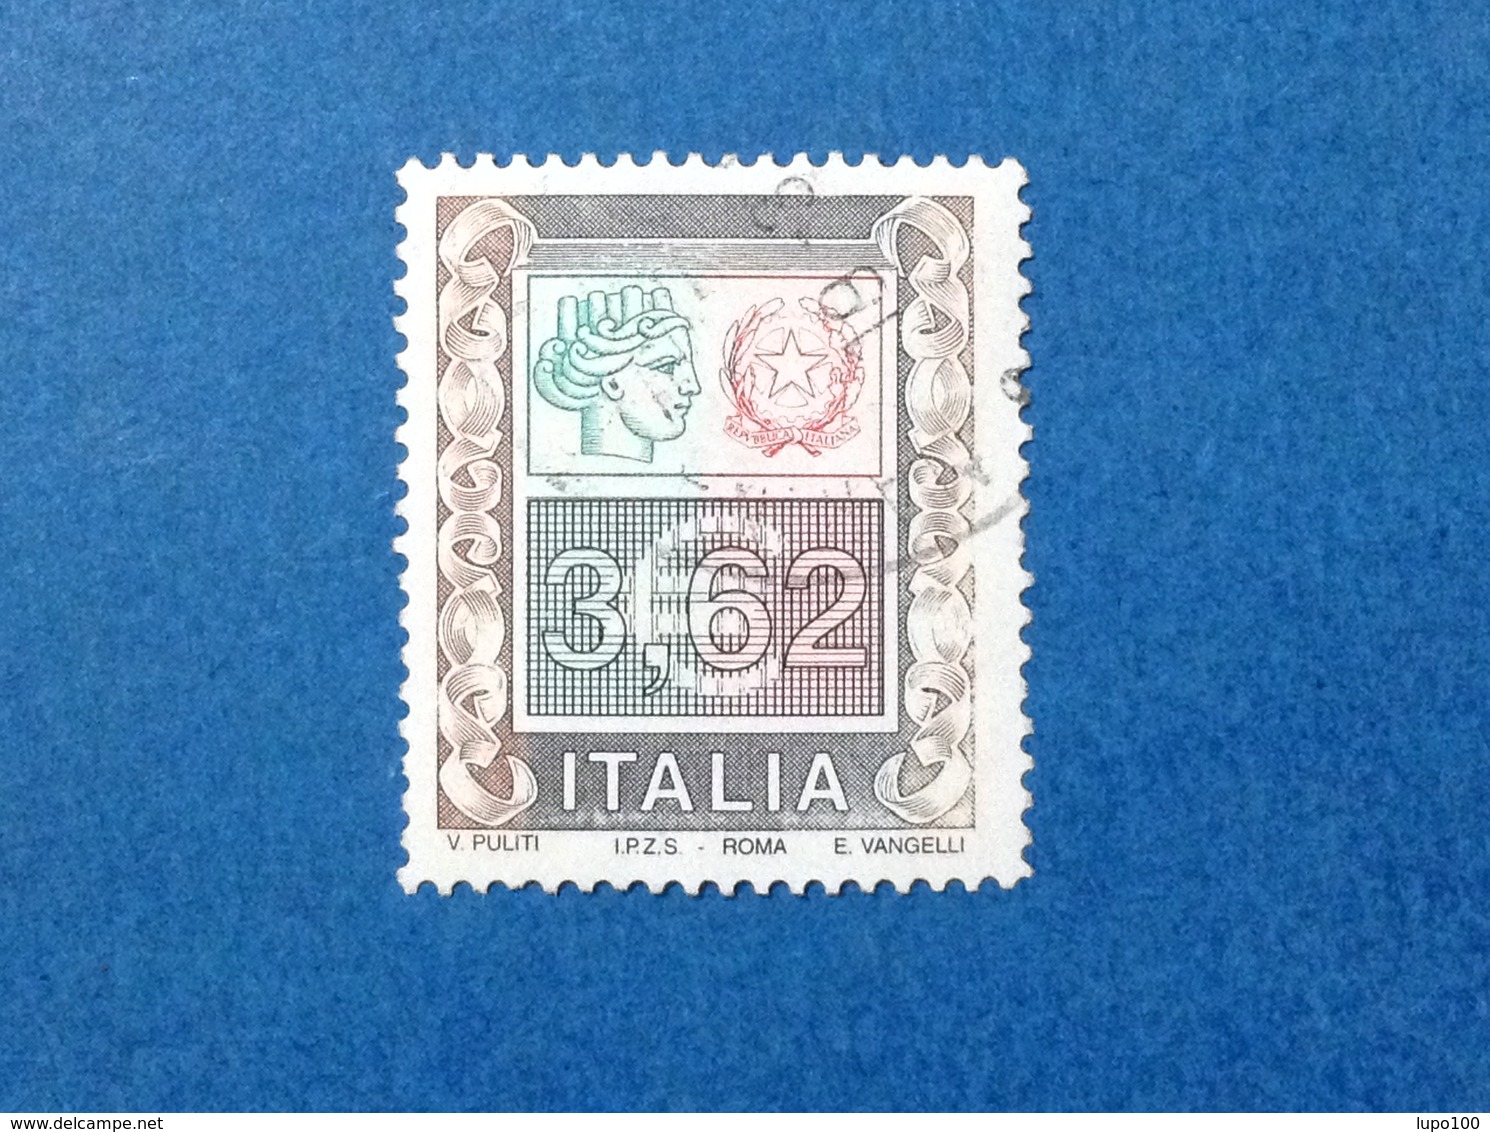 2002 ITALIA FRANCOBOLLO USATO ITALY STAMP USED ALTI VALORI ALTO VALORE 3,62 - 2001-10: Usati